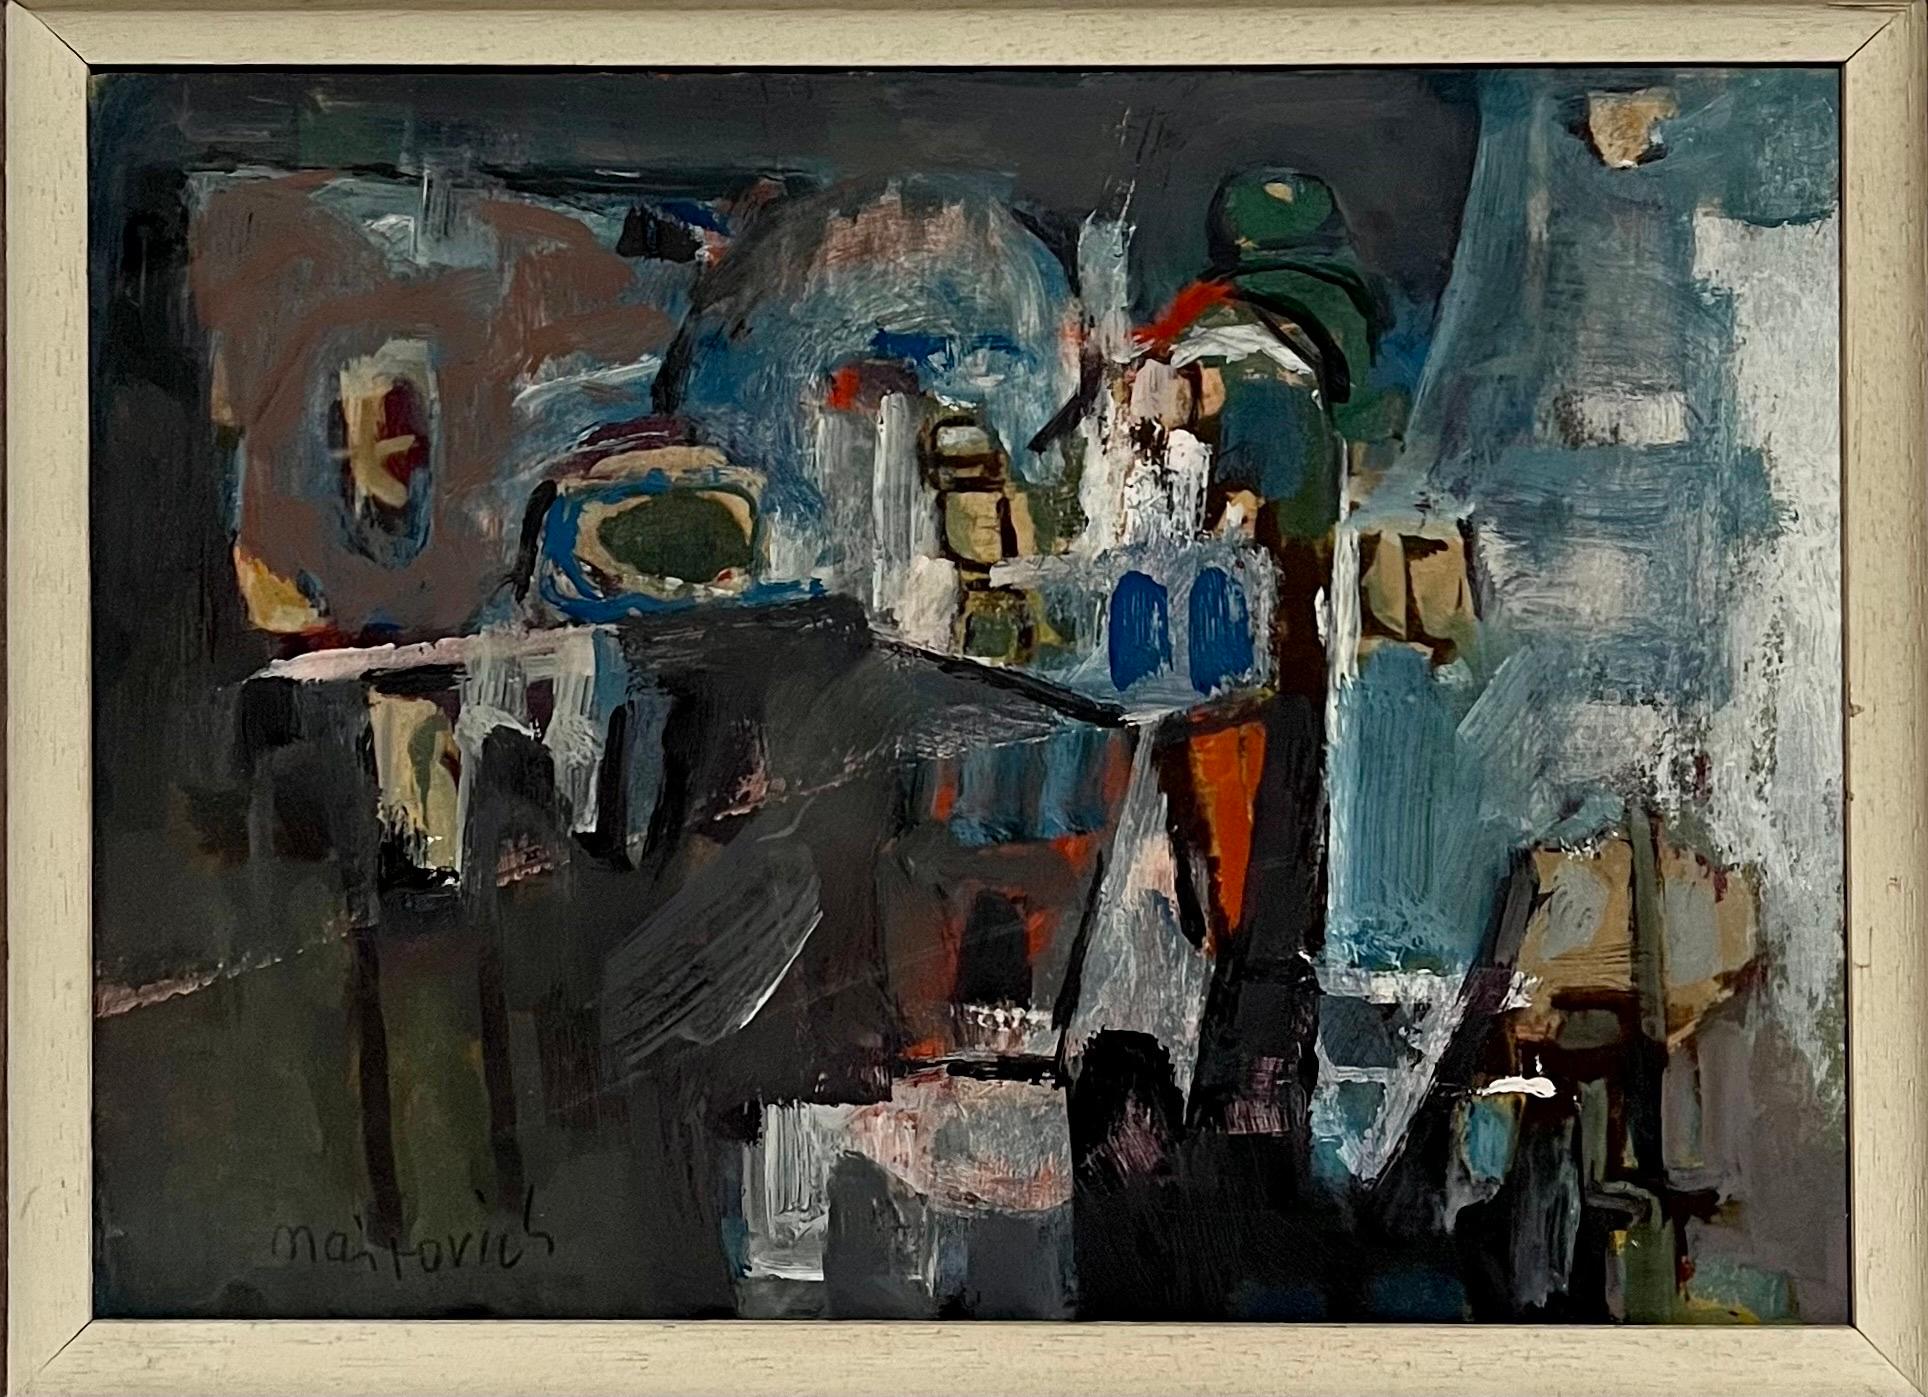 Abstract Painting Zvi Mairovich - Mairovich, peinture moderniste israélienne de Tel Aviv, paysage urbain abstrait et vibrant